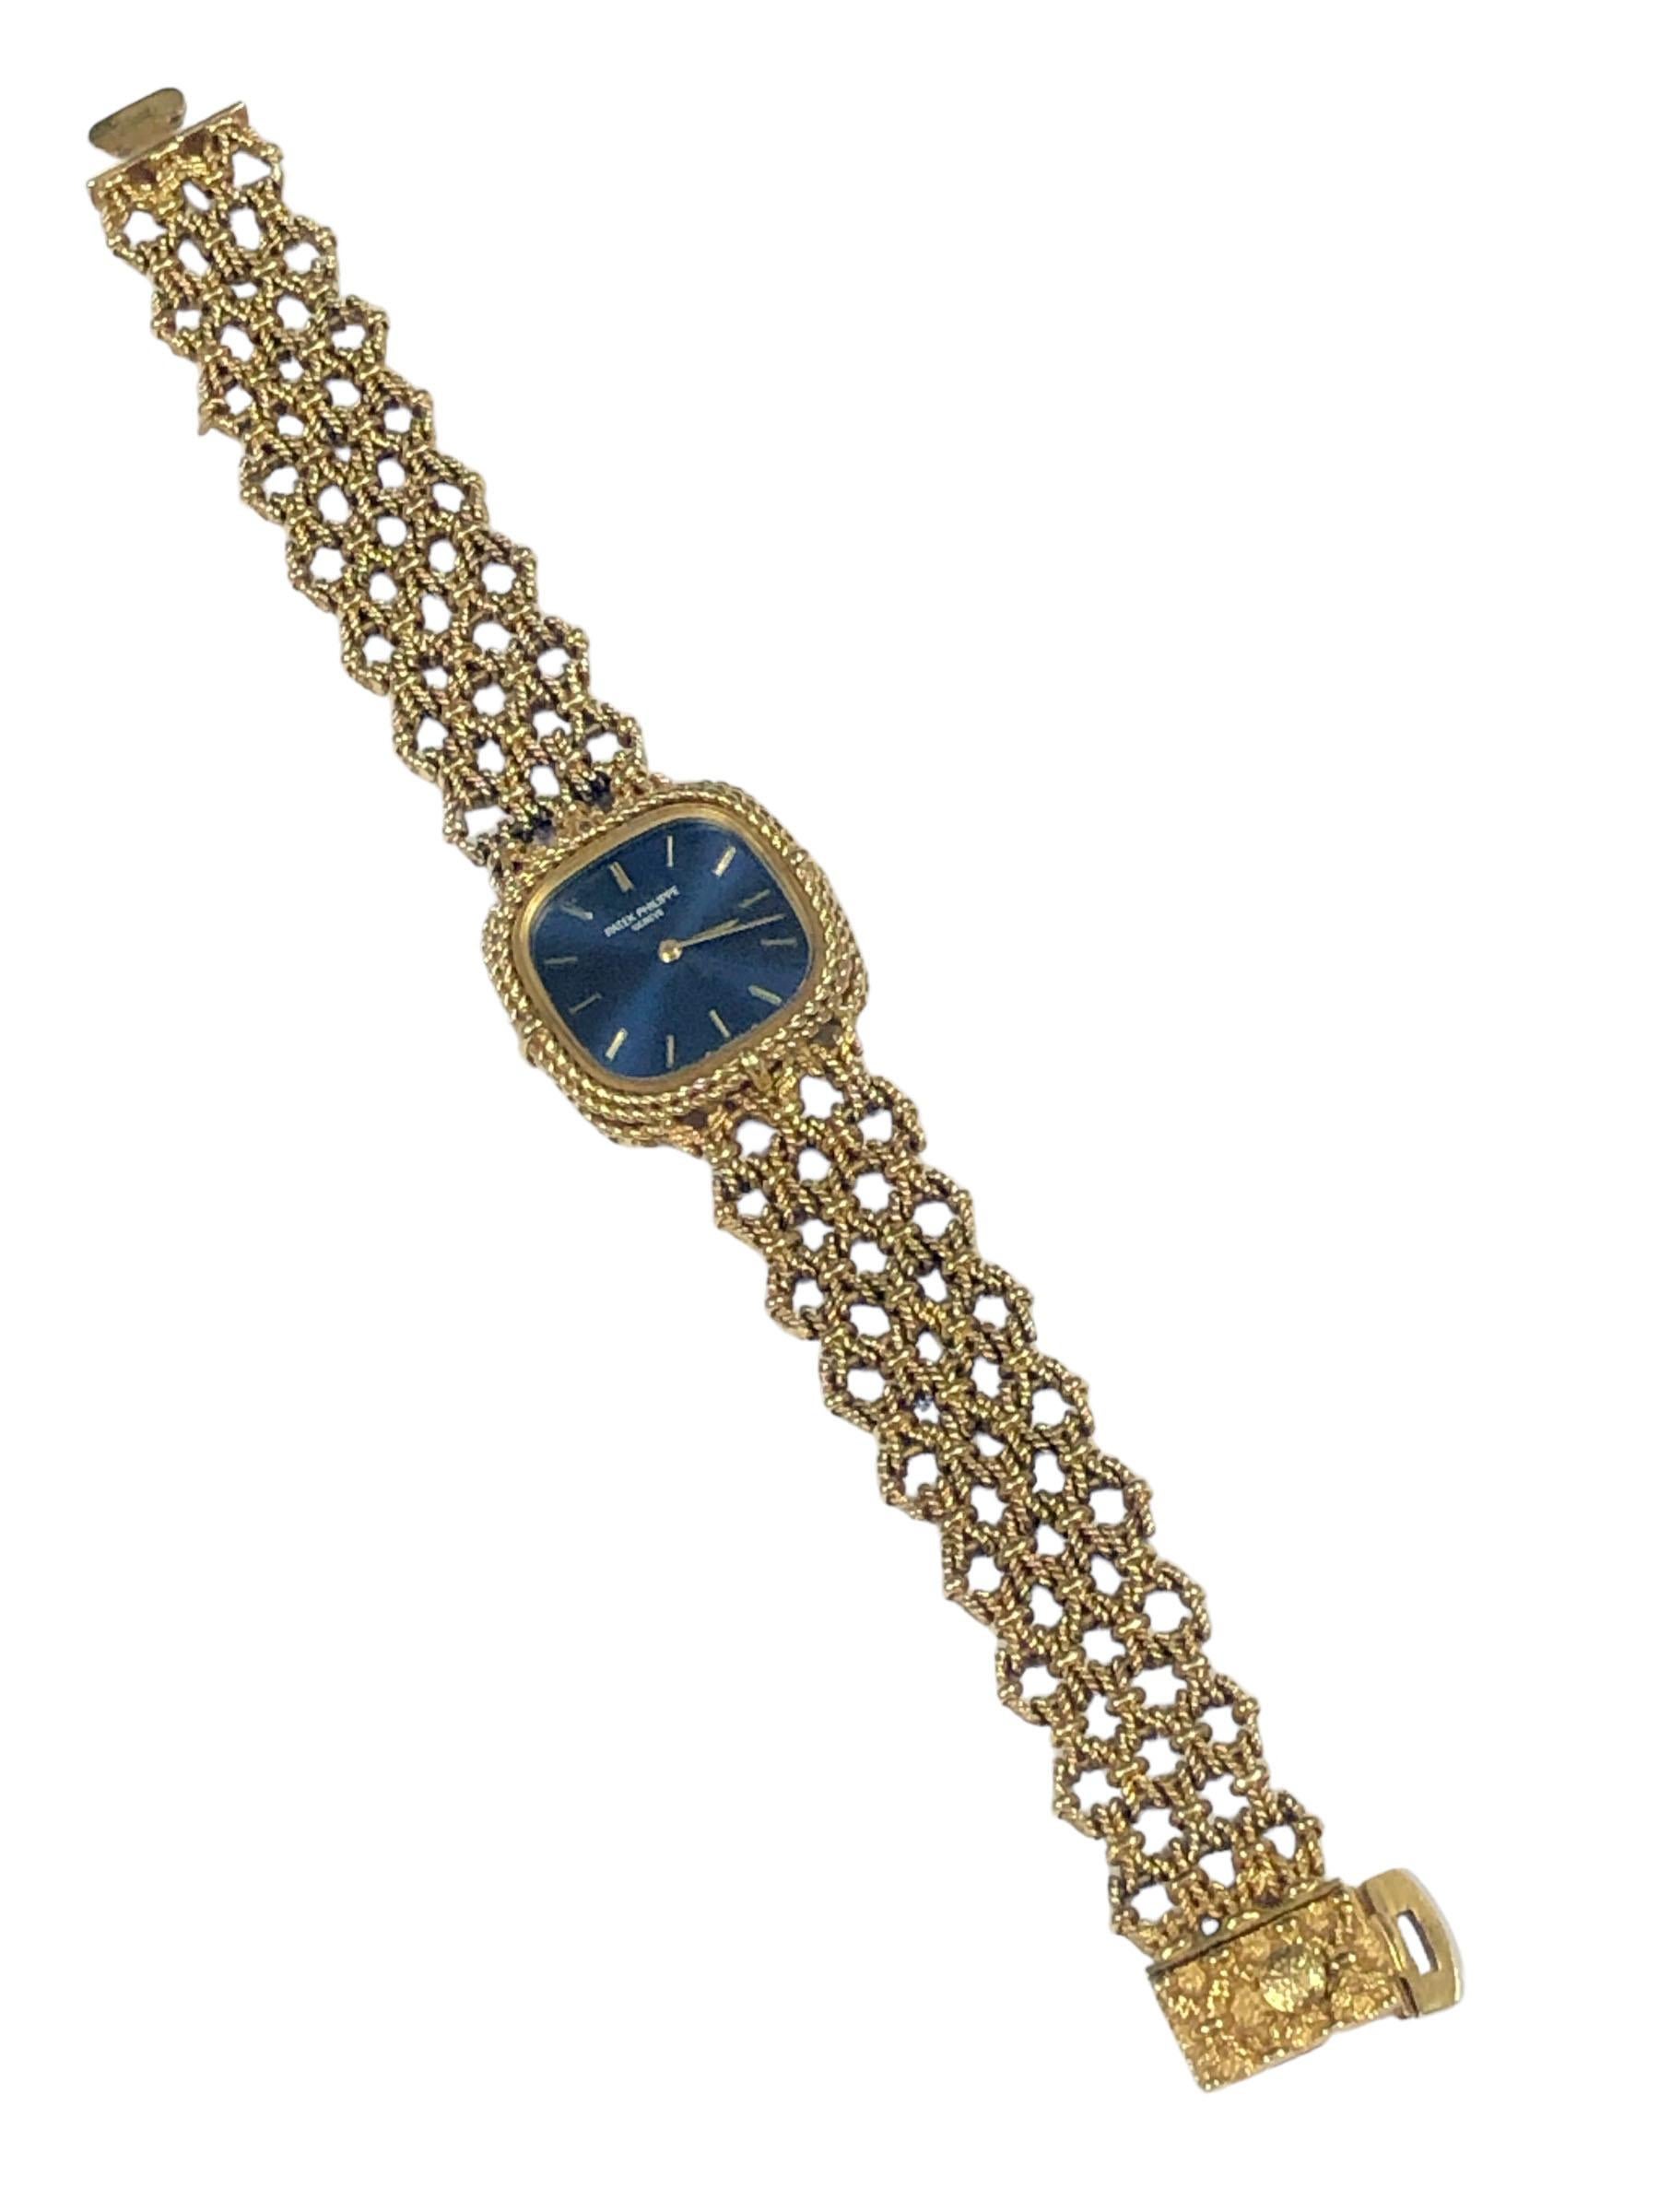 Patek Philippe Ref  4265 Yellow Gold Ladies Bracelet Wrist Watch For Sale 1